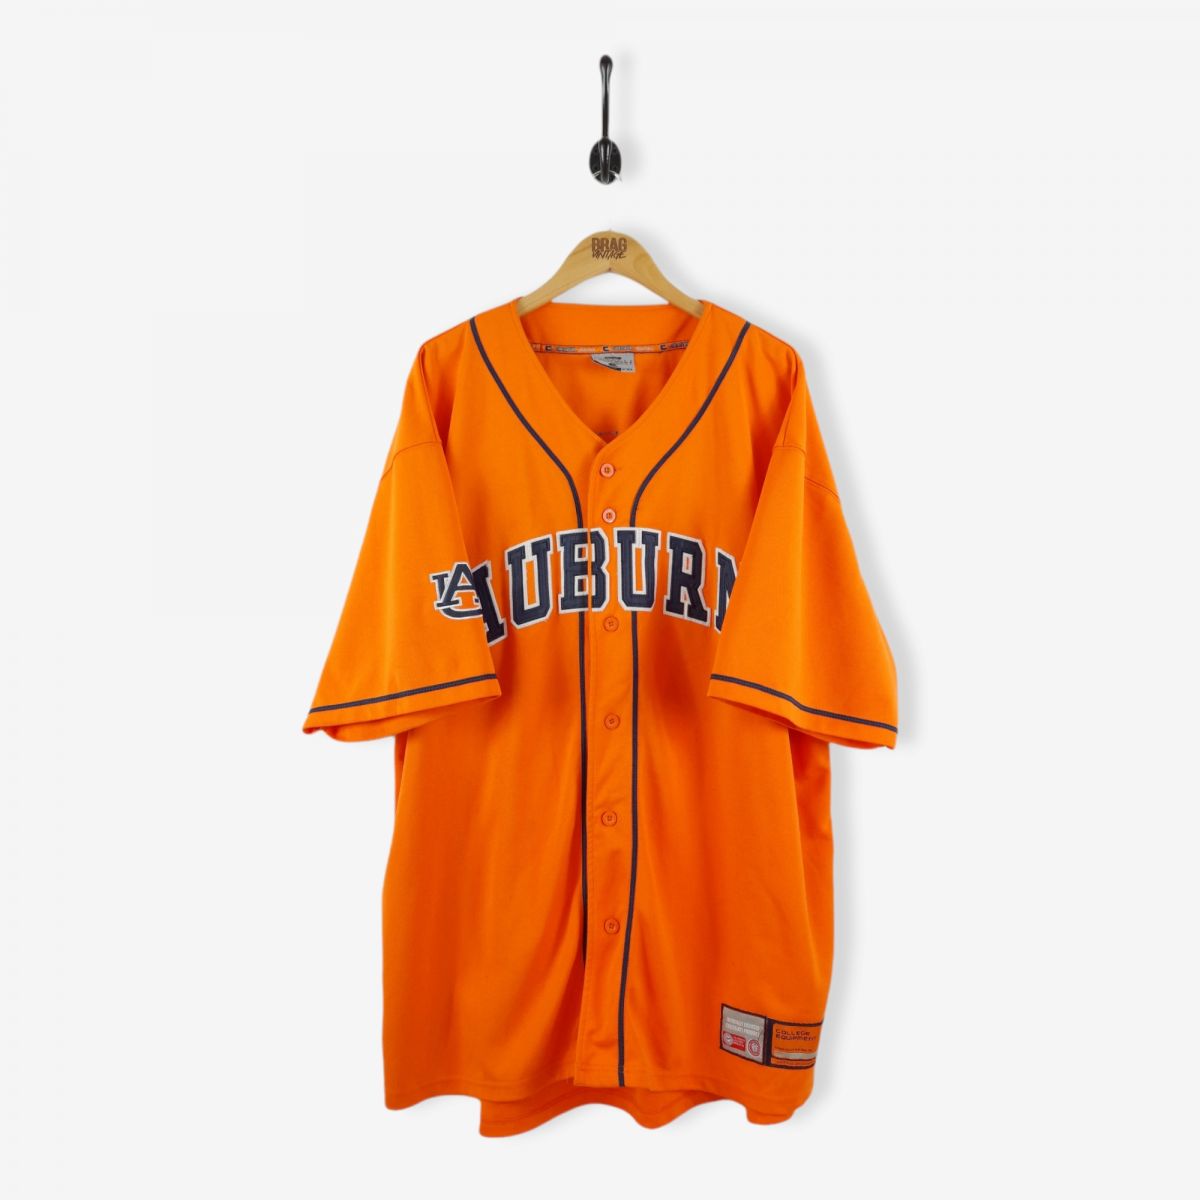 Vintage Auburn Tigers Baseball Jersey Orange 2XL